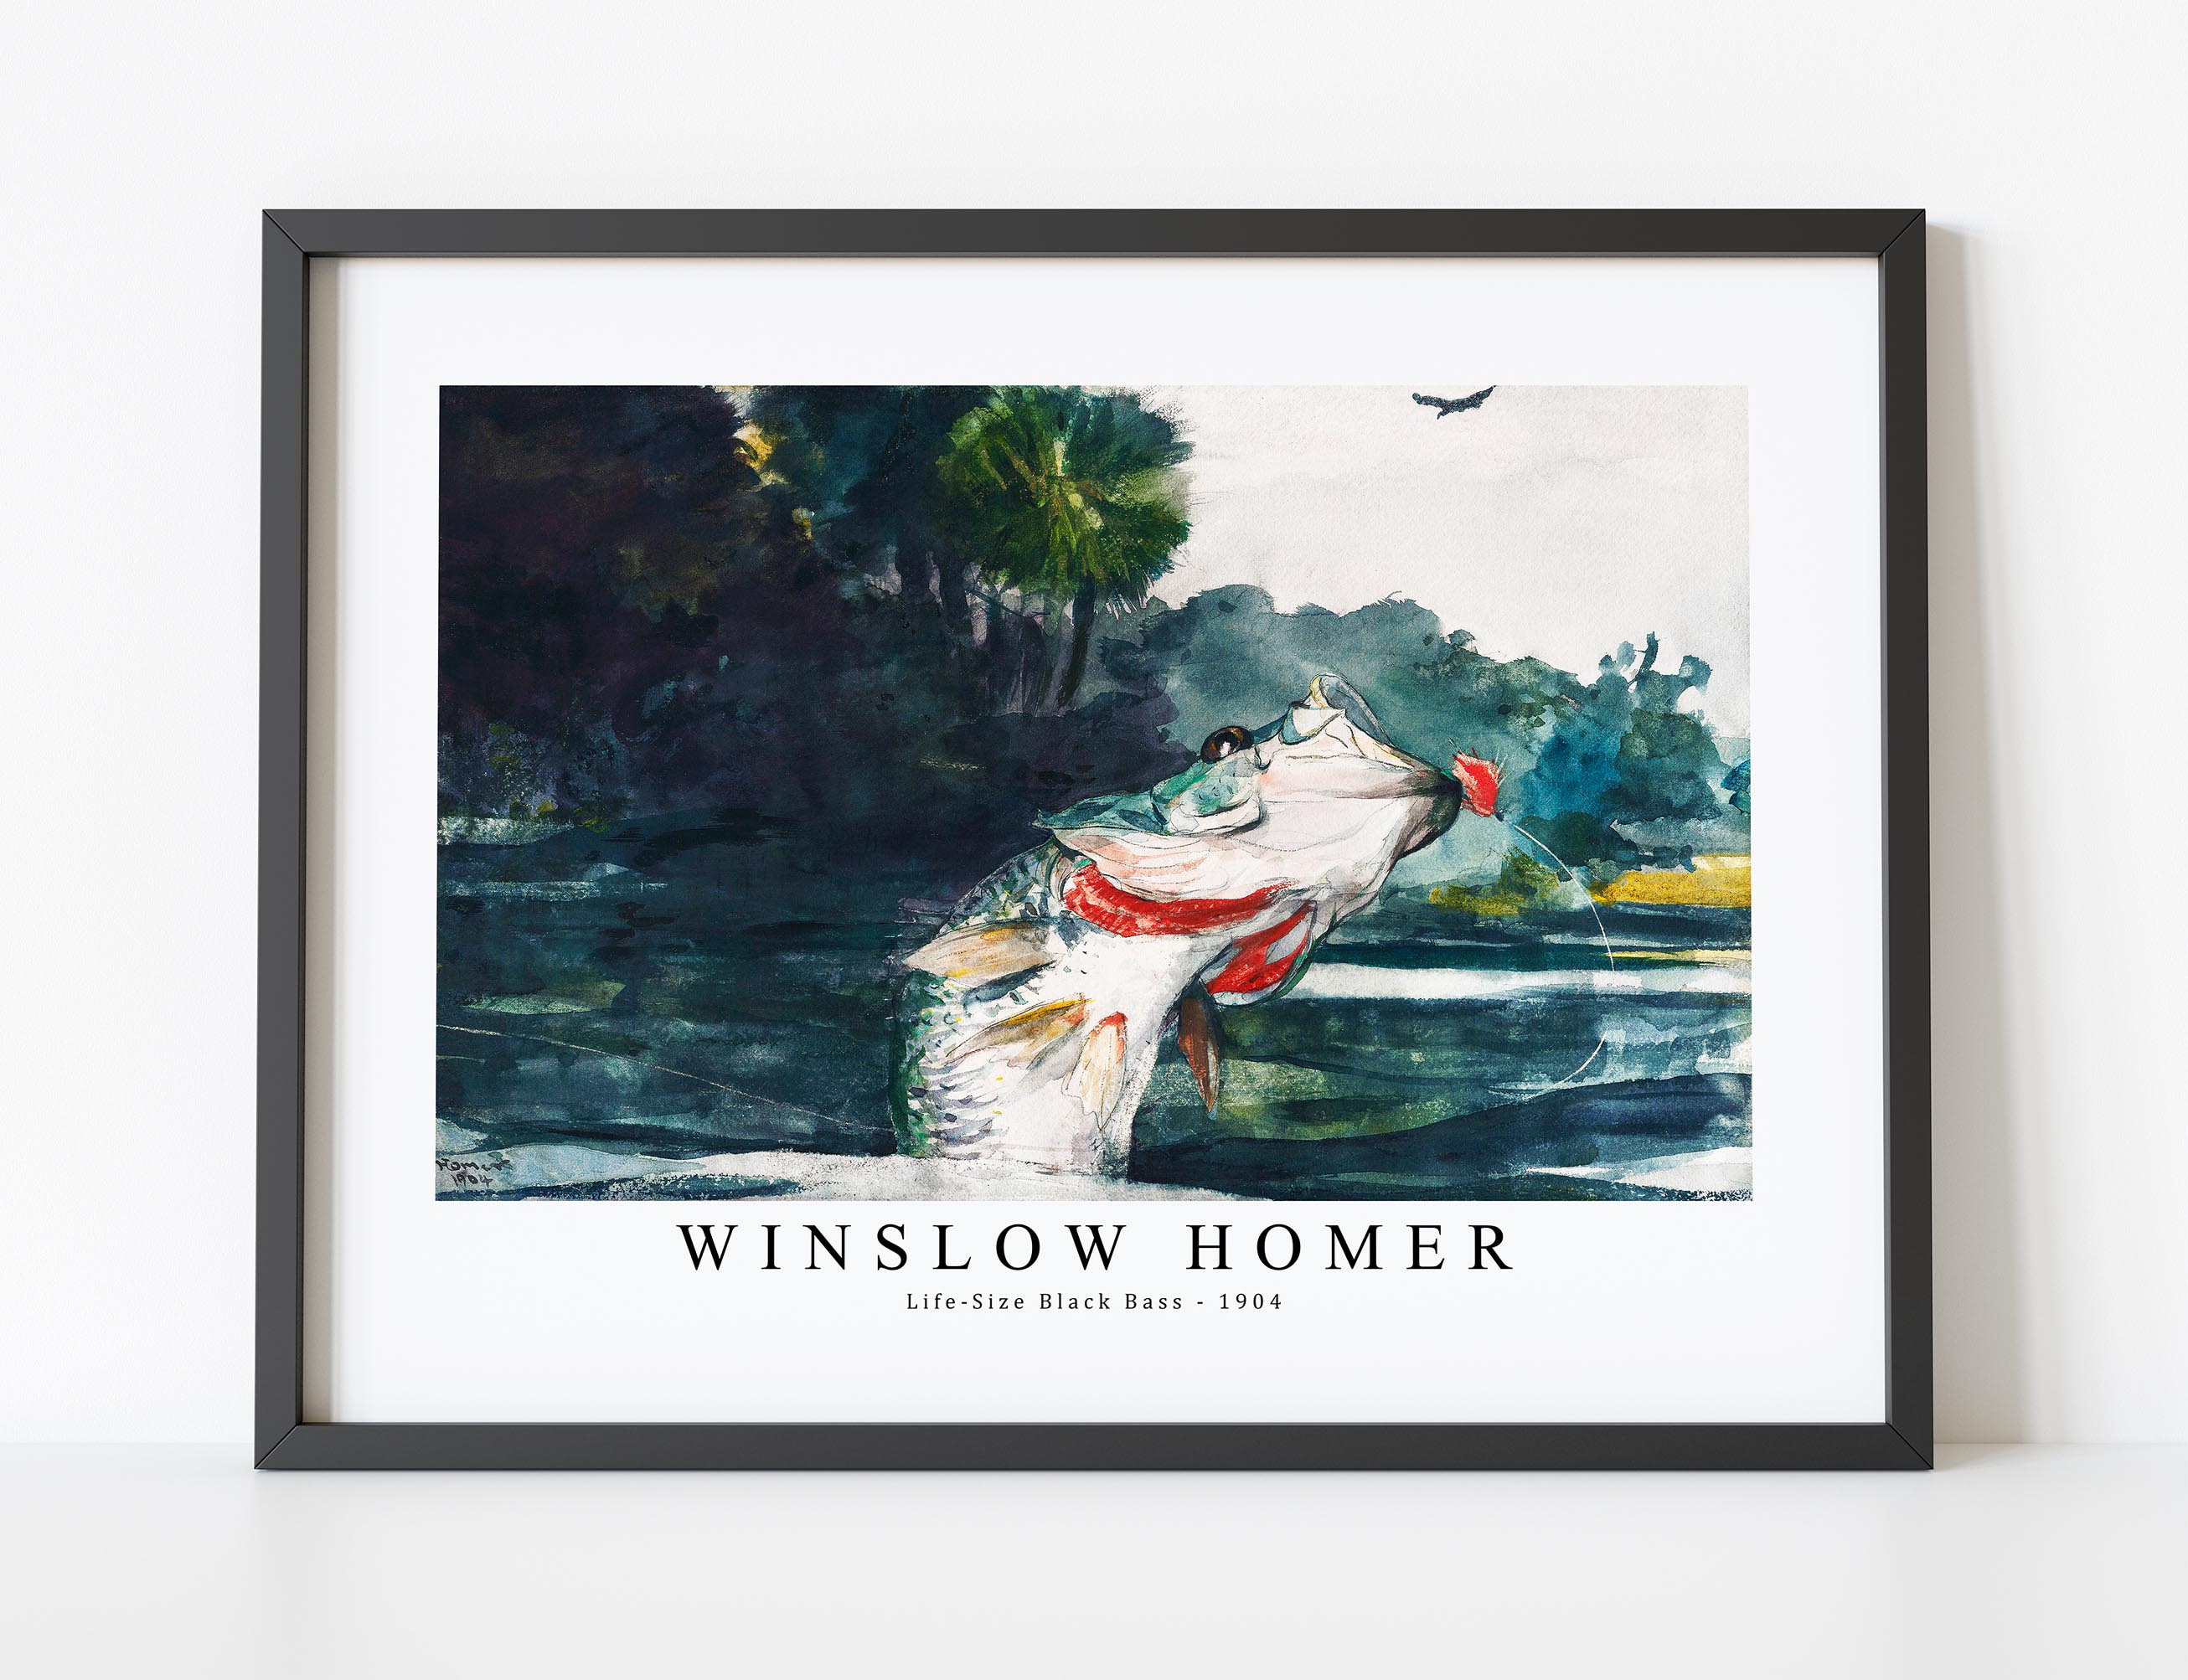 Fine Art Print Life-Size Black Bass (Vintage Fishing) - Winslow Homer